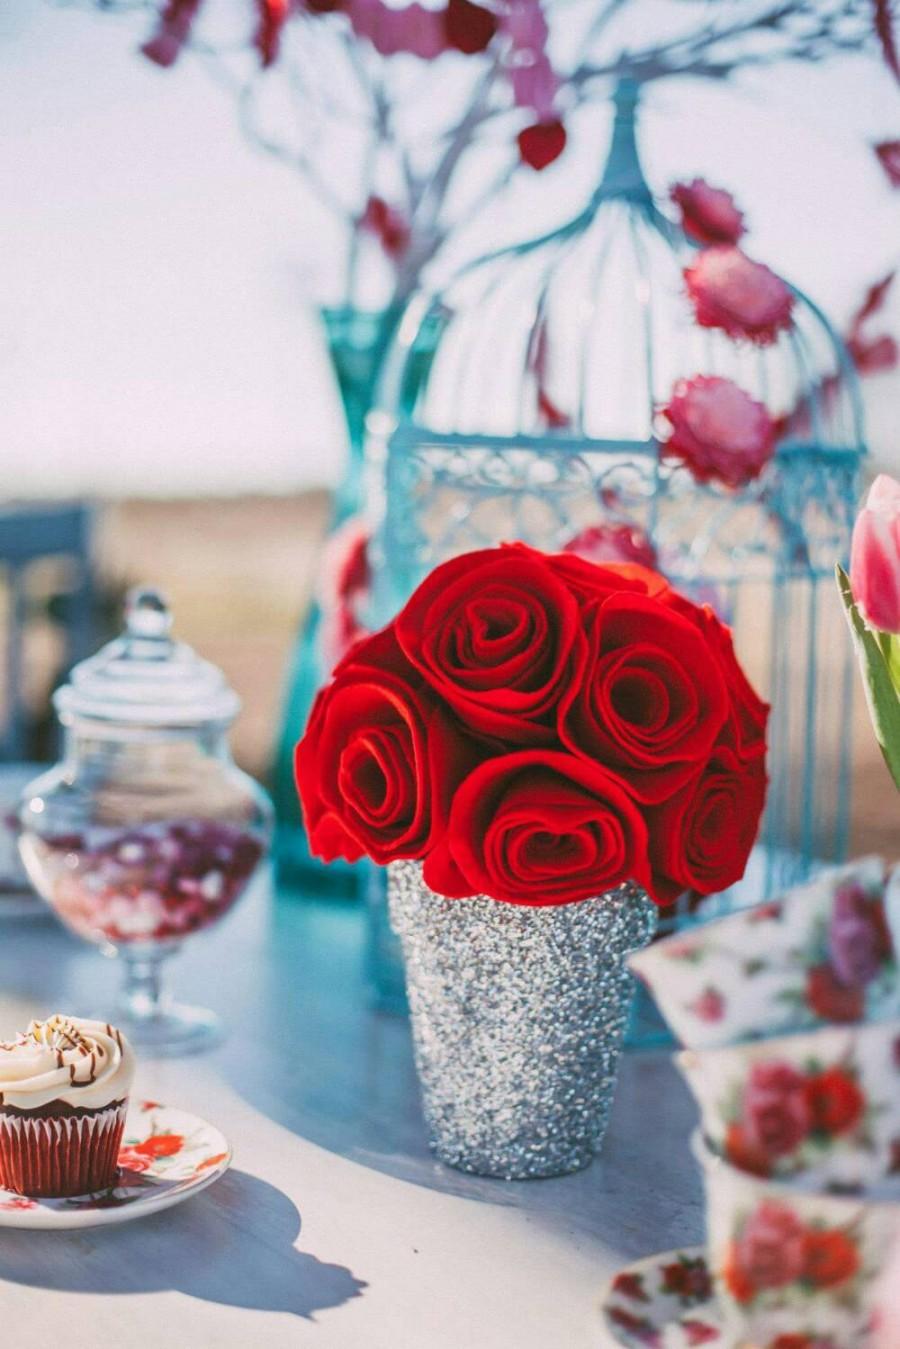 Wedding - Felt Red Rose Topiary in Glittered Pot 